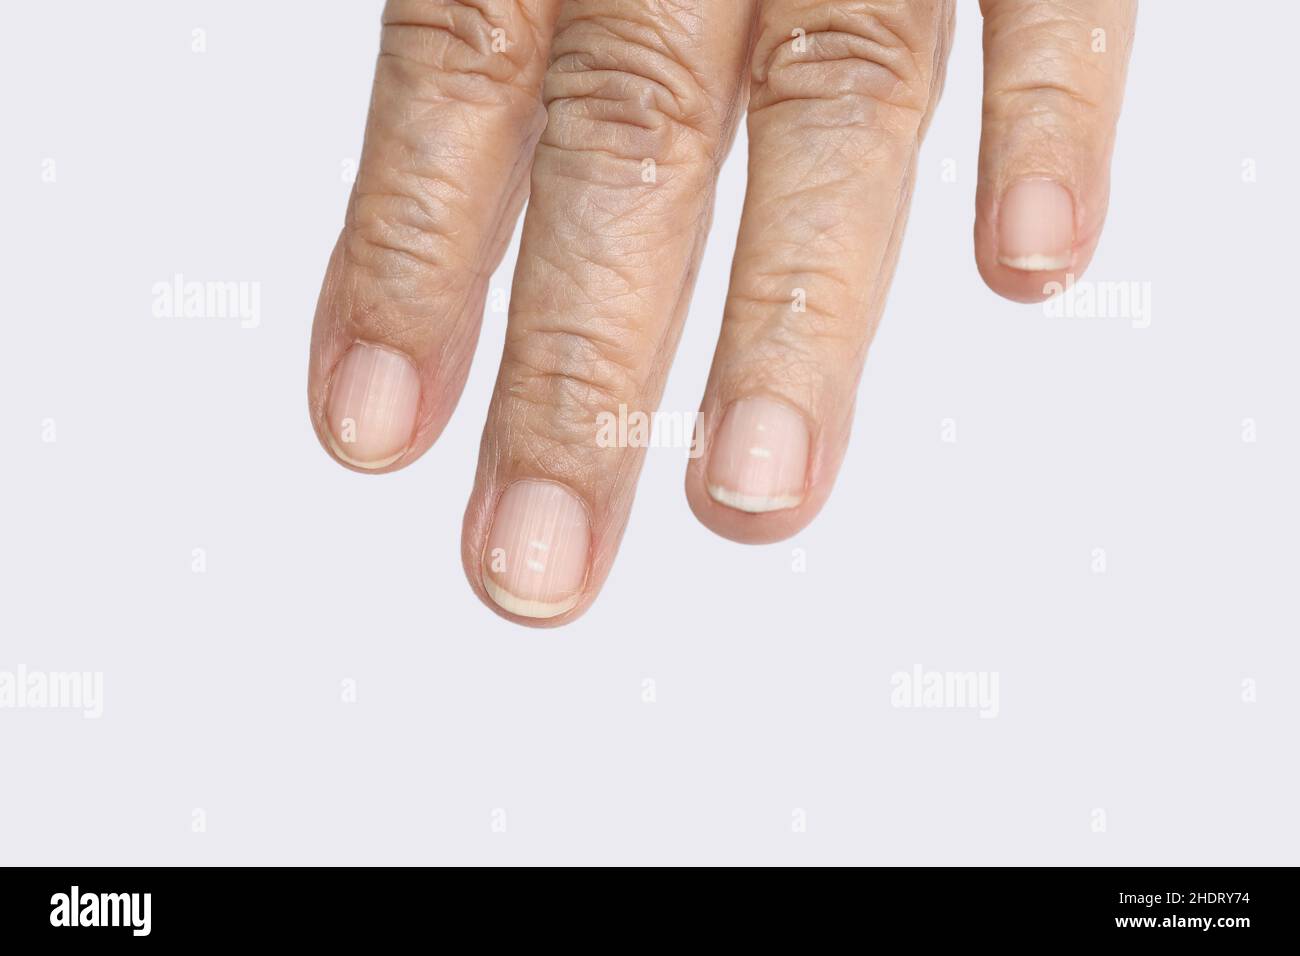 Macchie bianche sulle unghie anziane causate da una carenza di calcio Foto  stock - Alamy